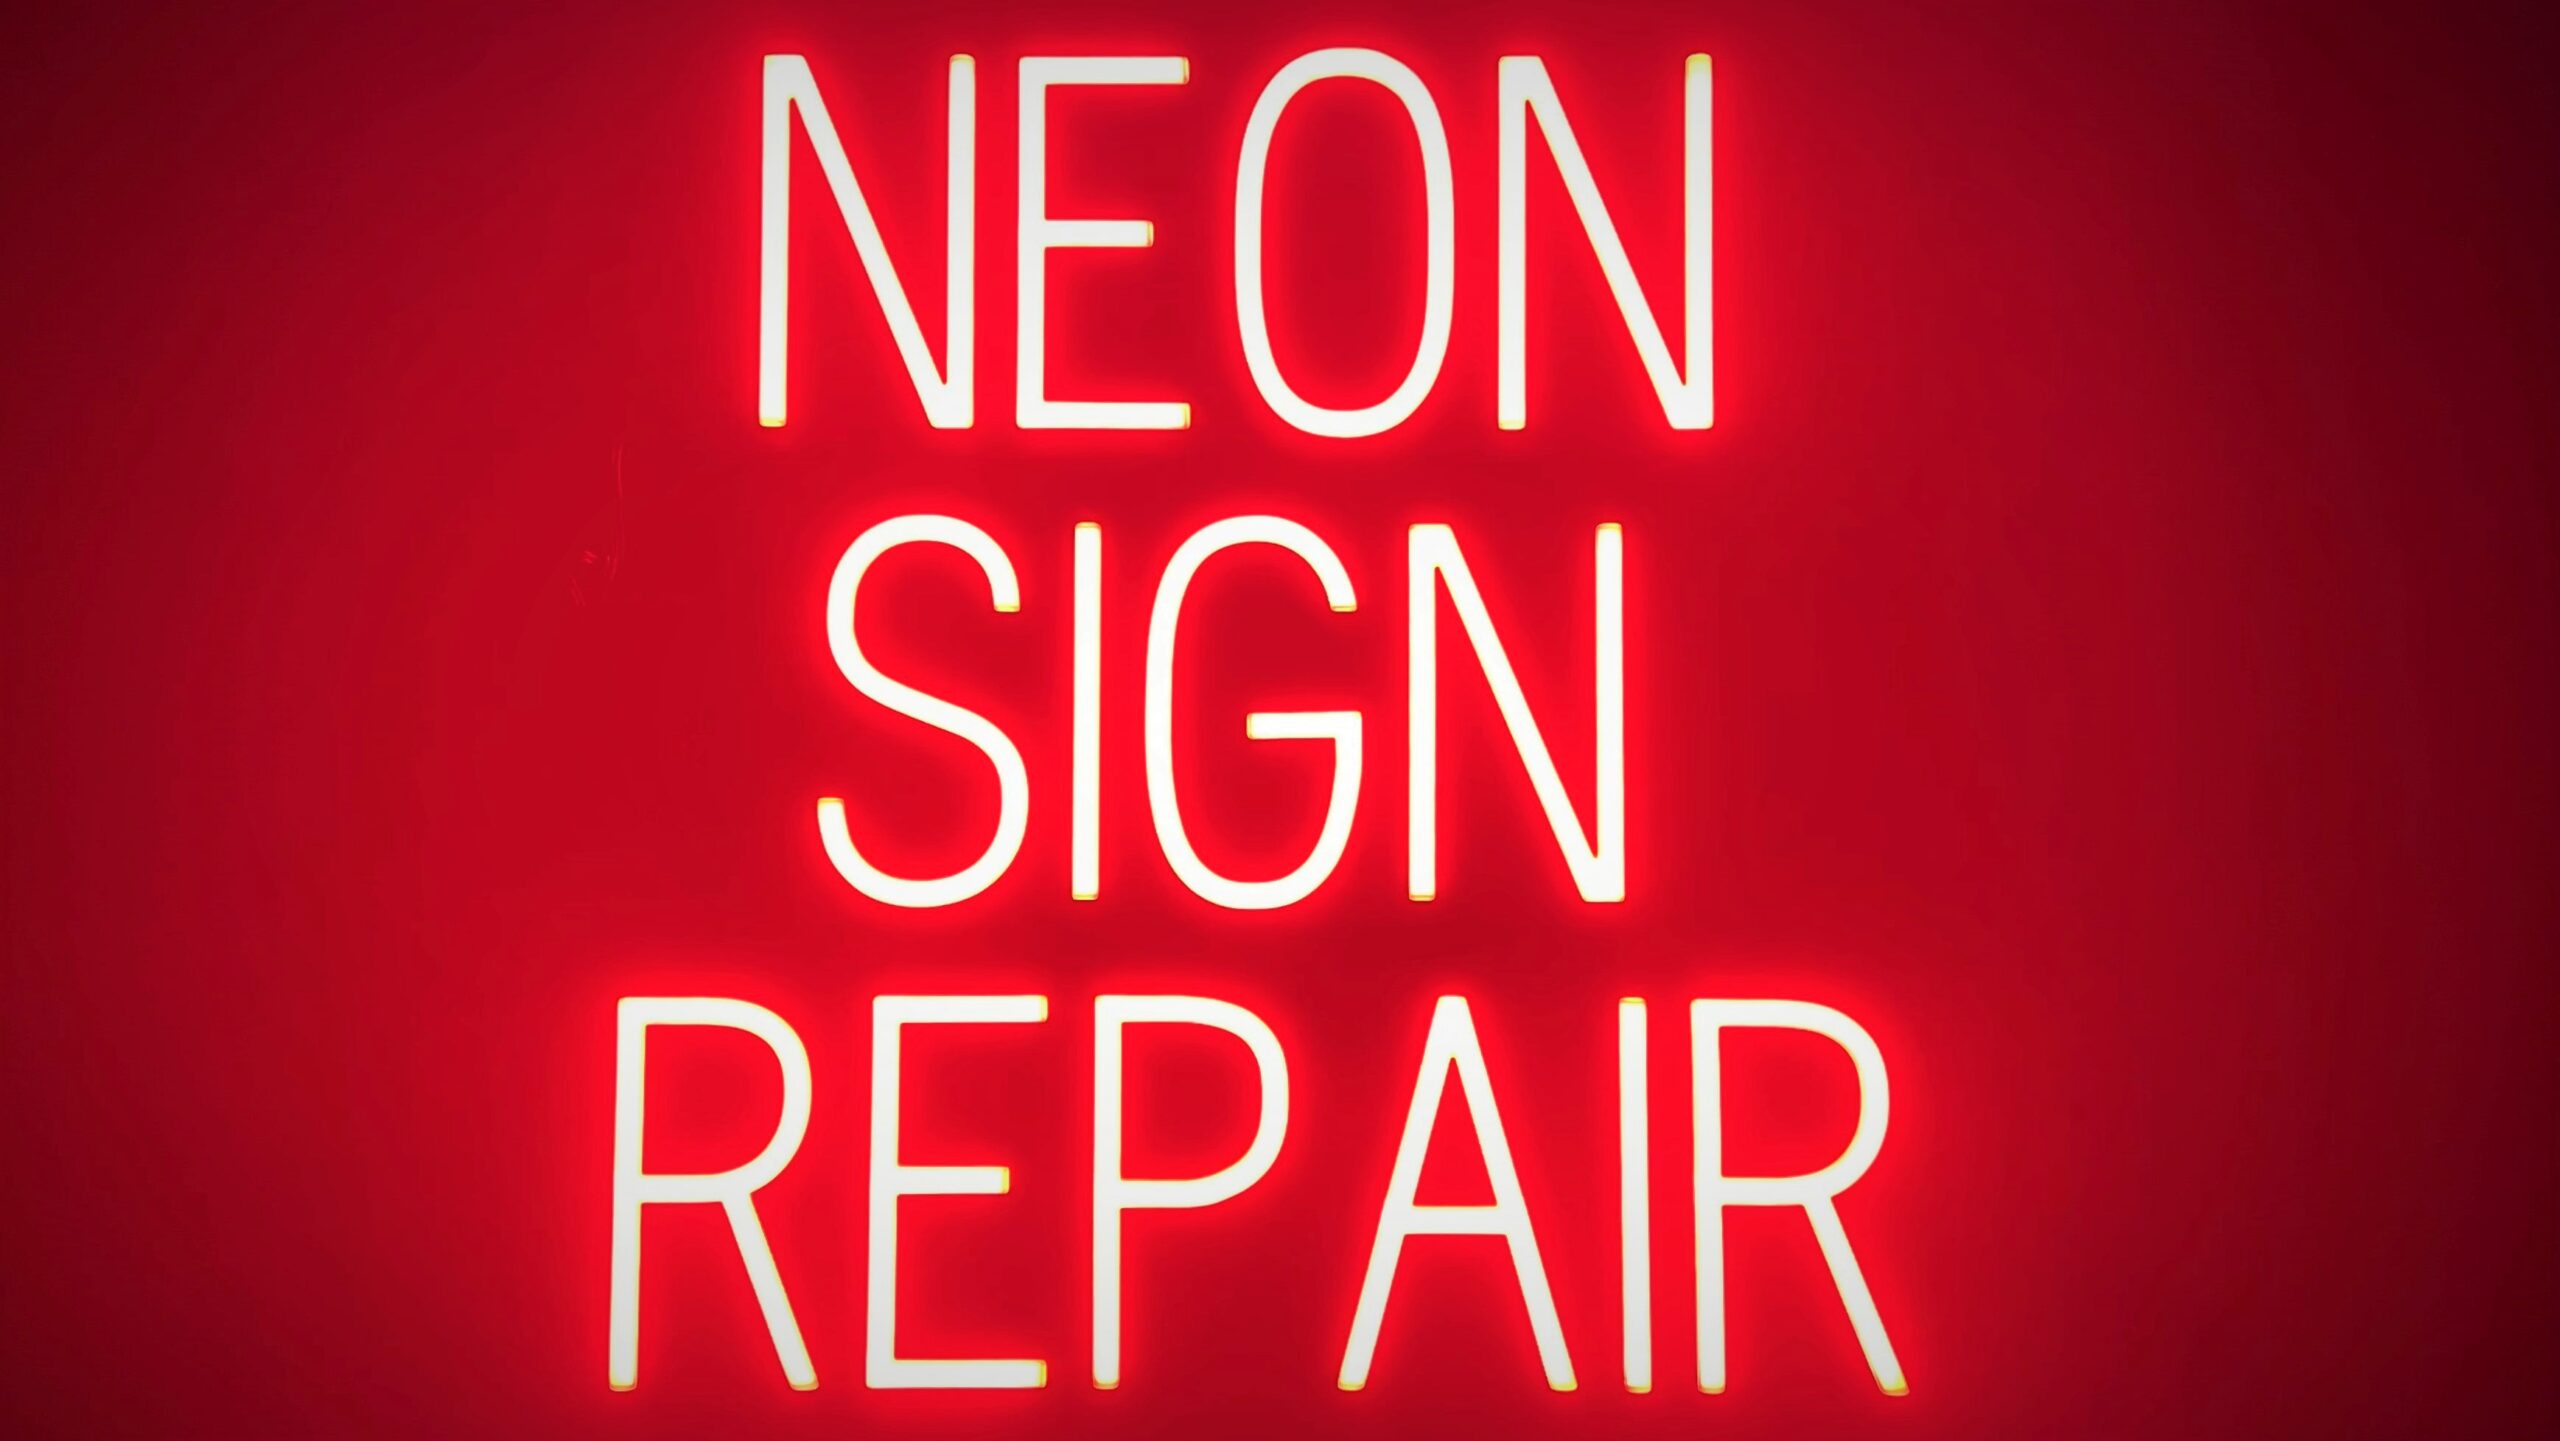 Neon Sign Repair, in SpellBrite’s custom LED signage for businesses